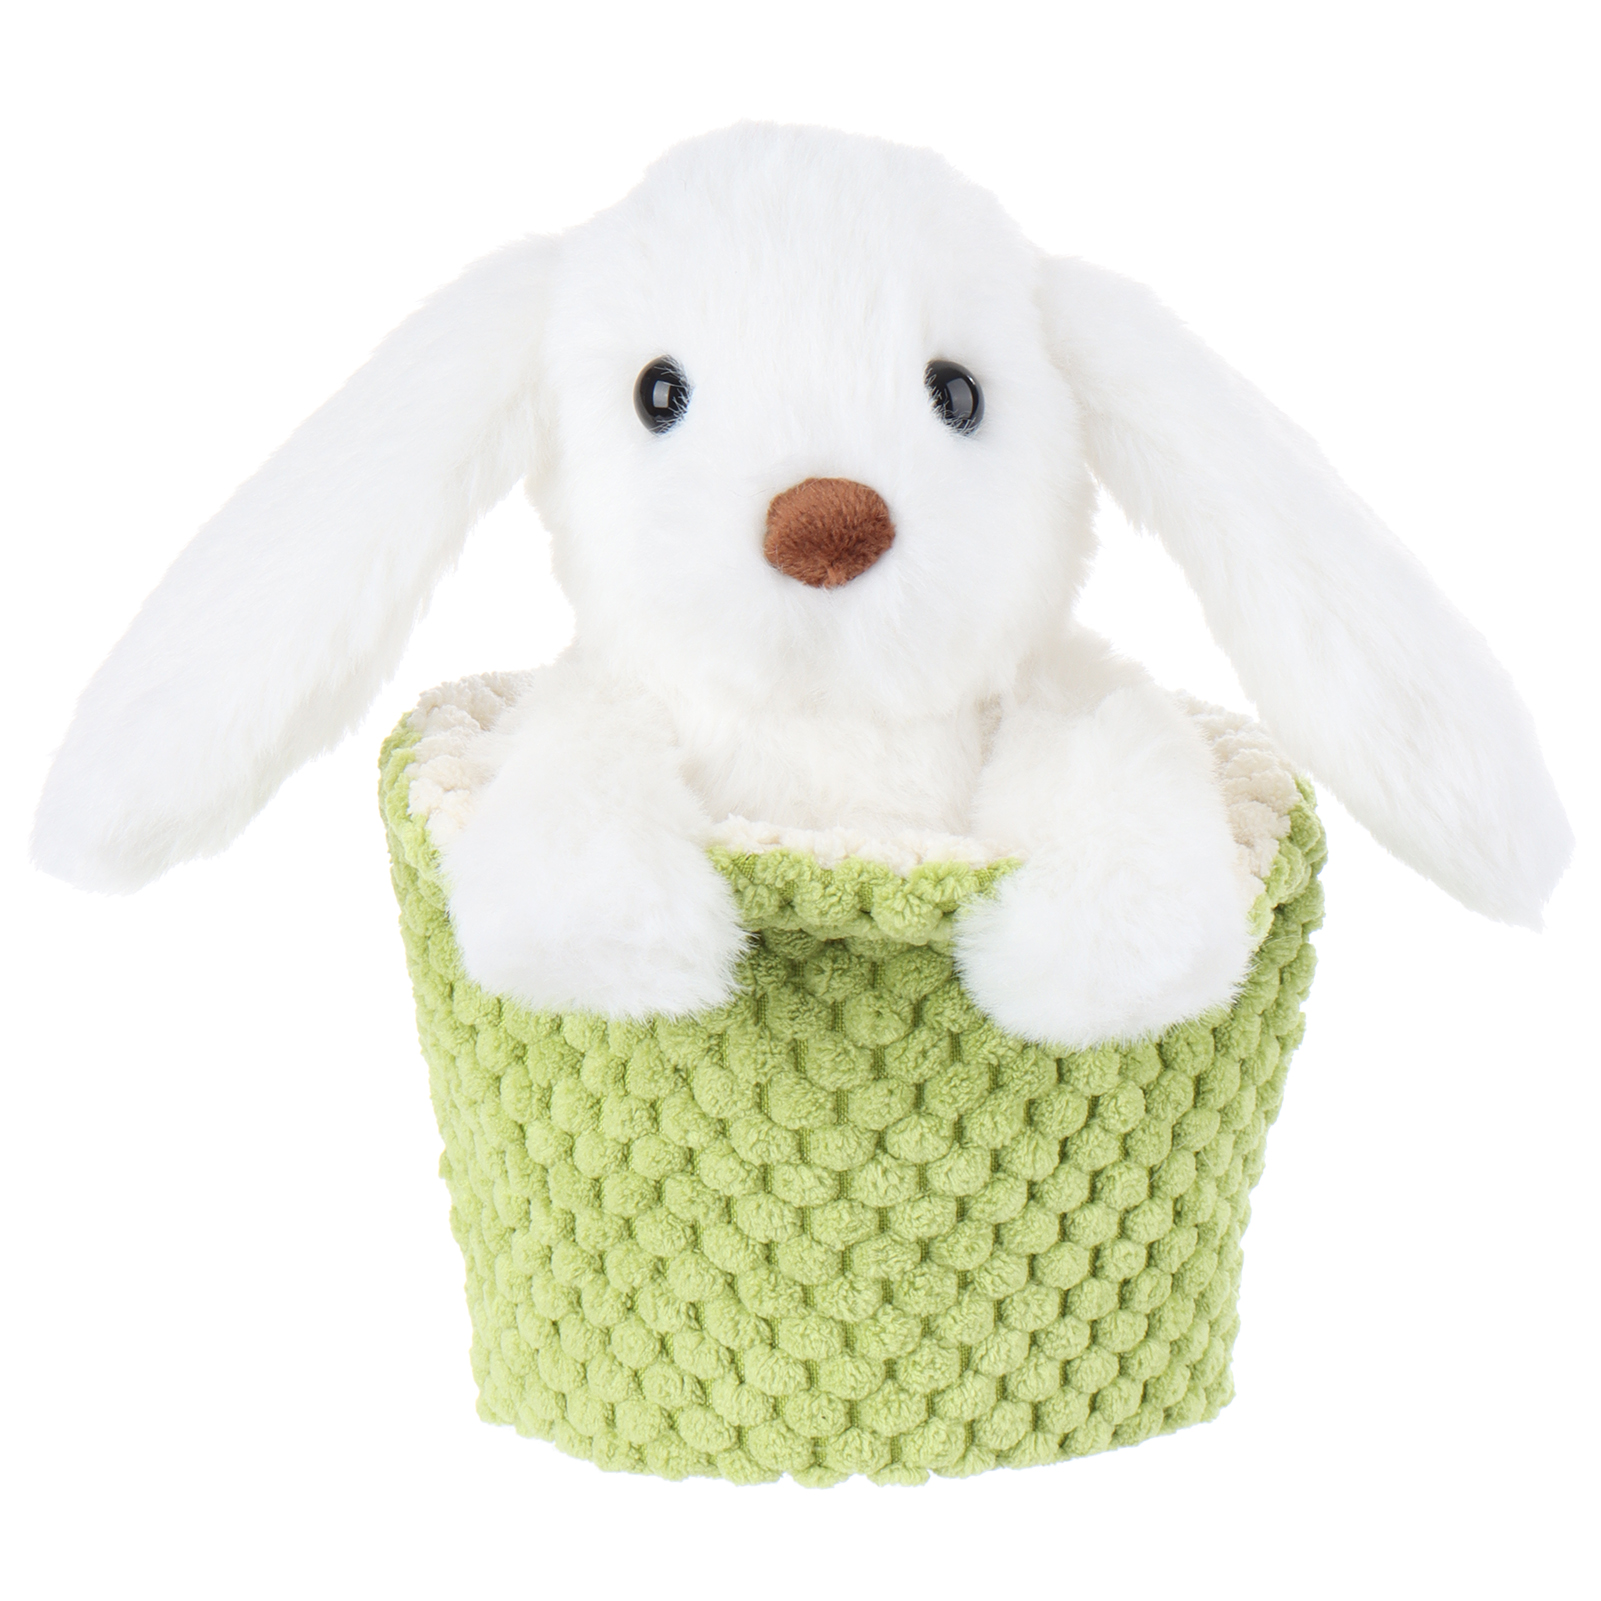 Apricot Lamb Teacup Bunny-Green Stuffed Animal Soft Plush Toys